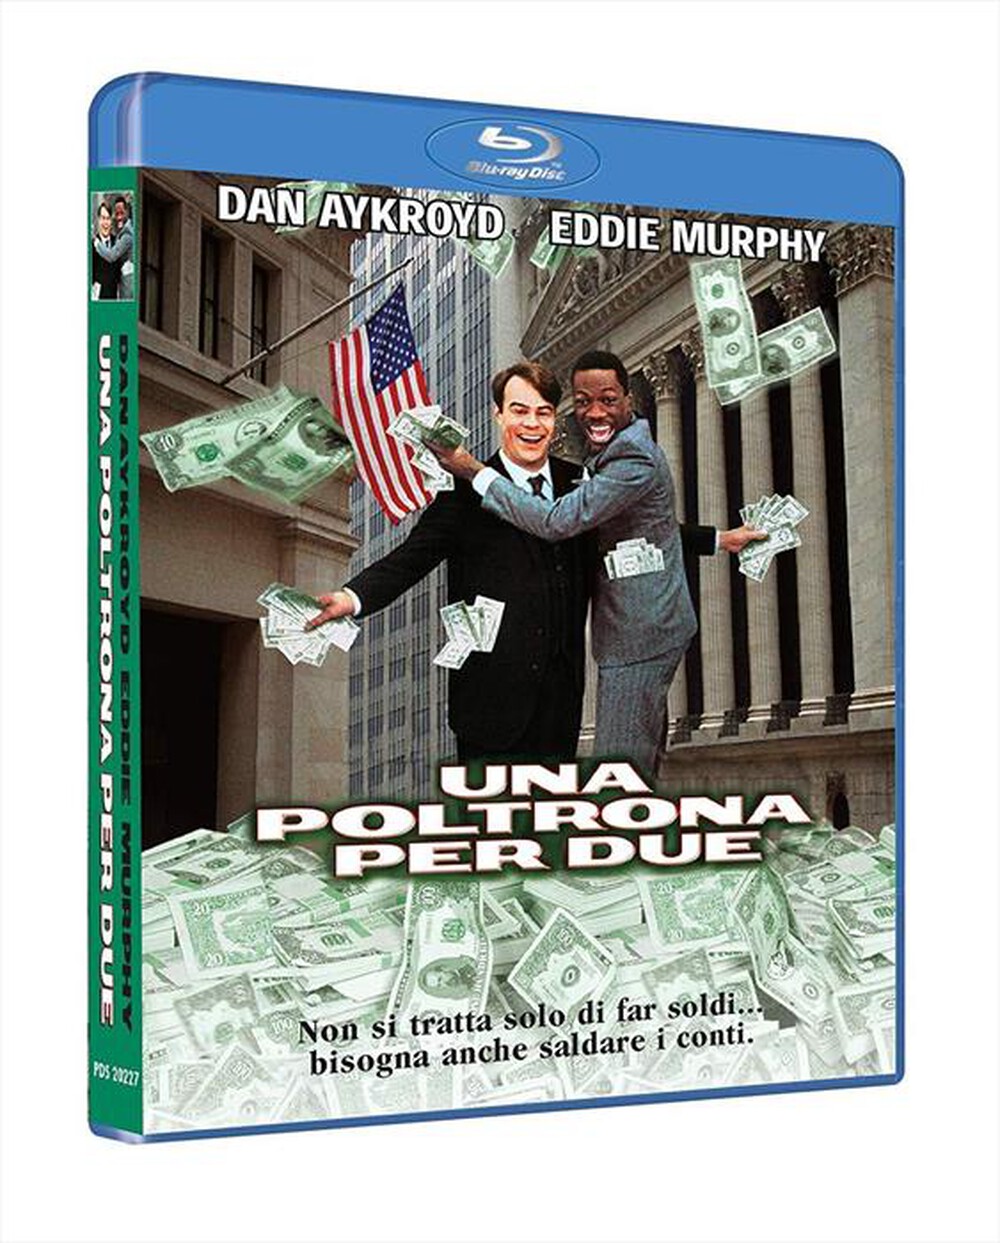 "Paramount Pictures - Poltrona Per Due (Una)"